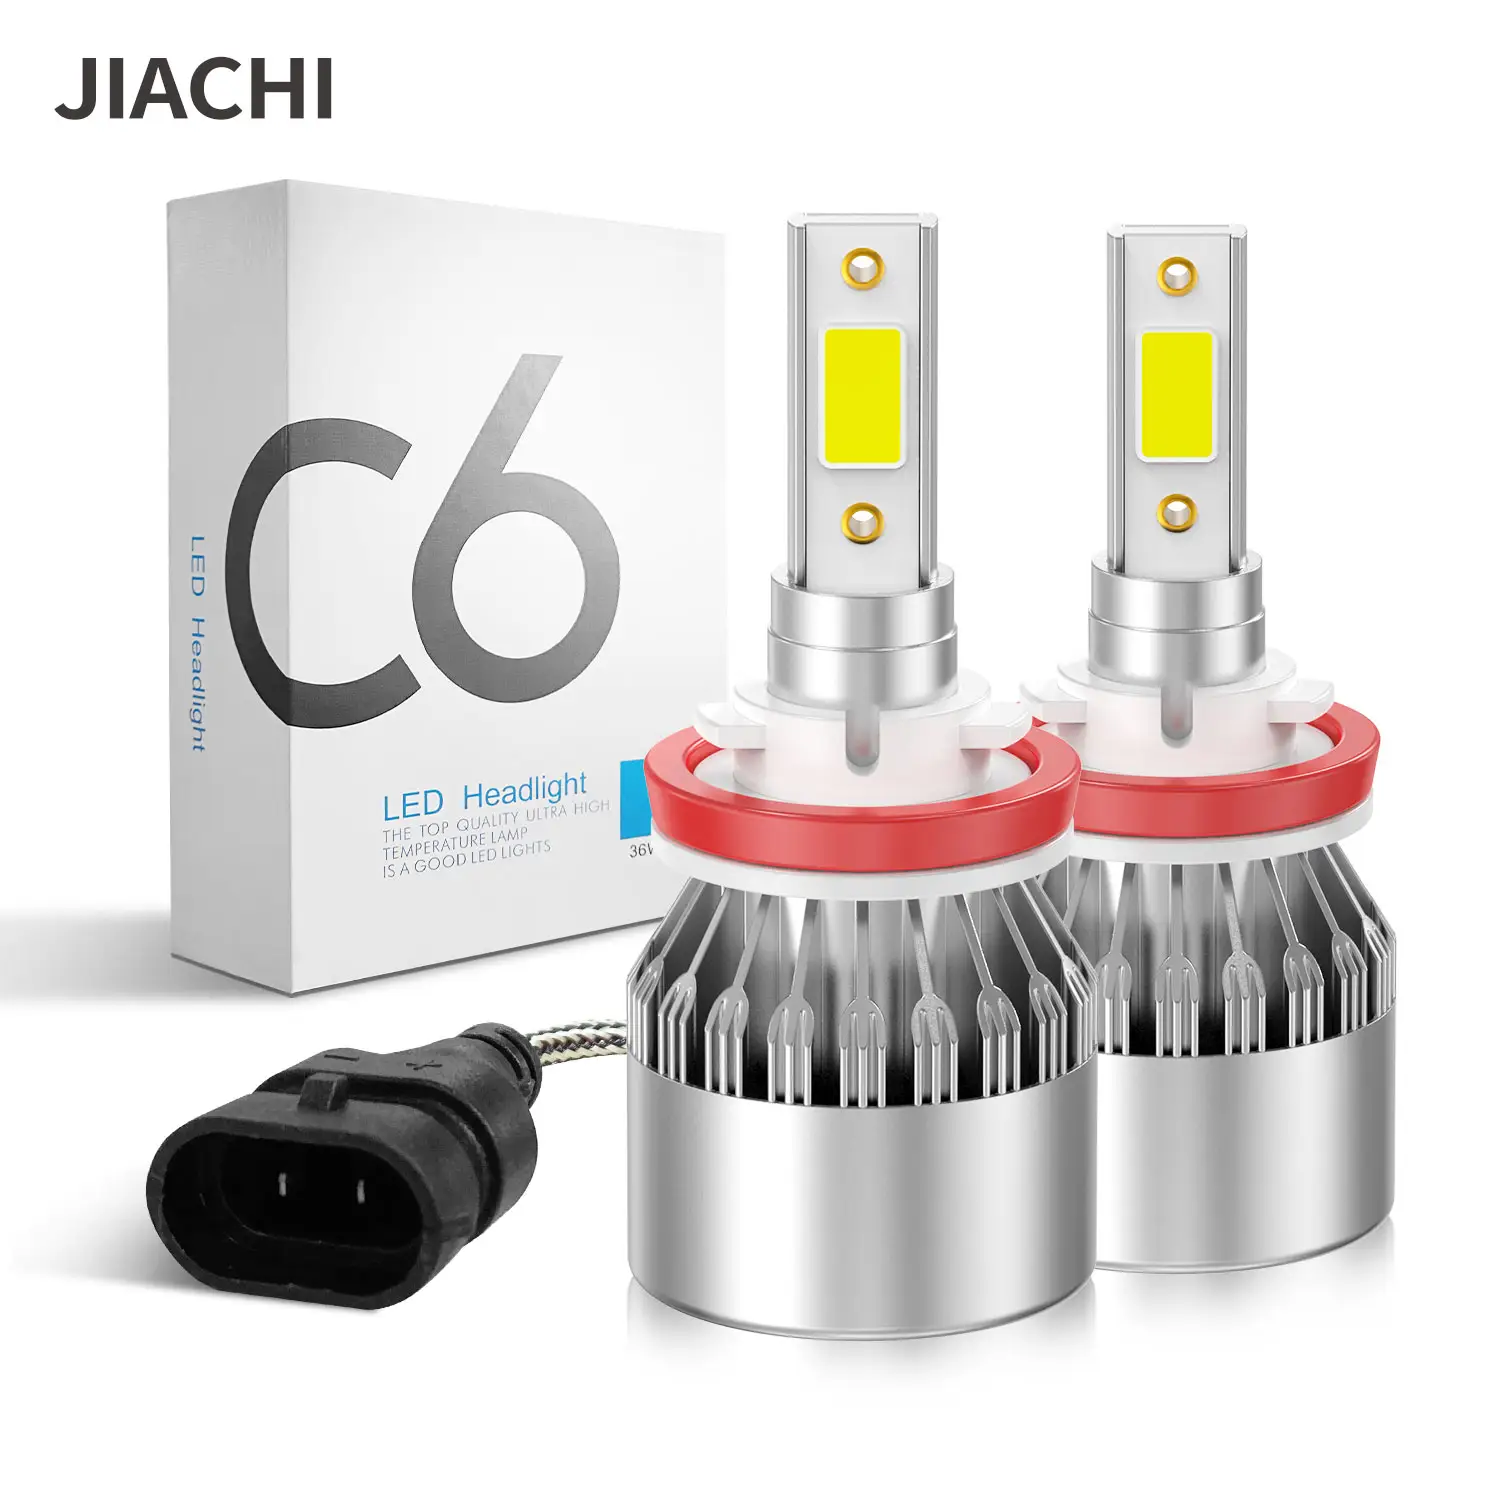 JIACHI Factory Super Bright C6 Fanles Auto Led Fog Light Car Bulb H11 H7 Headlight Lamp H1 H3 9005 9006 For Accessories Part 12V